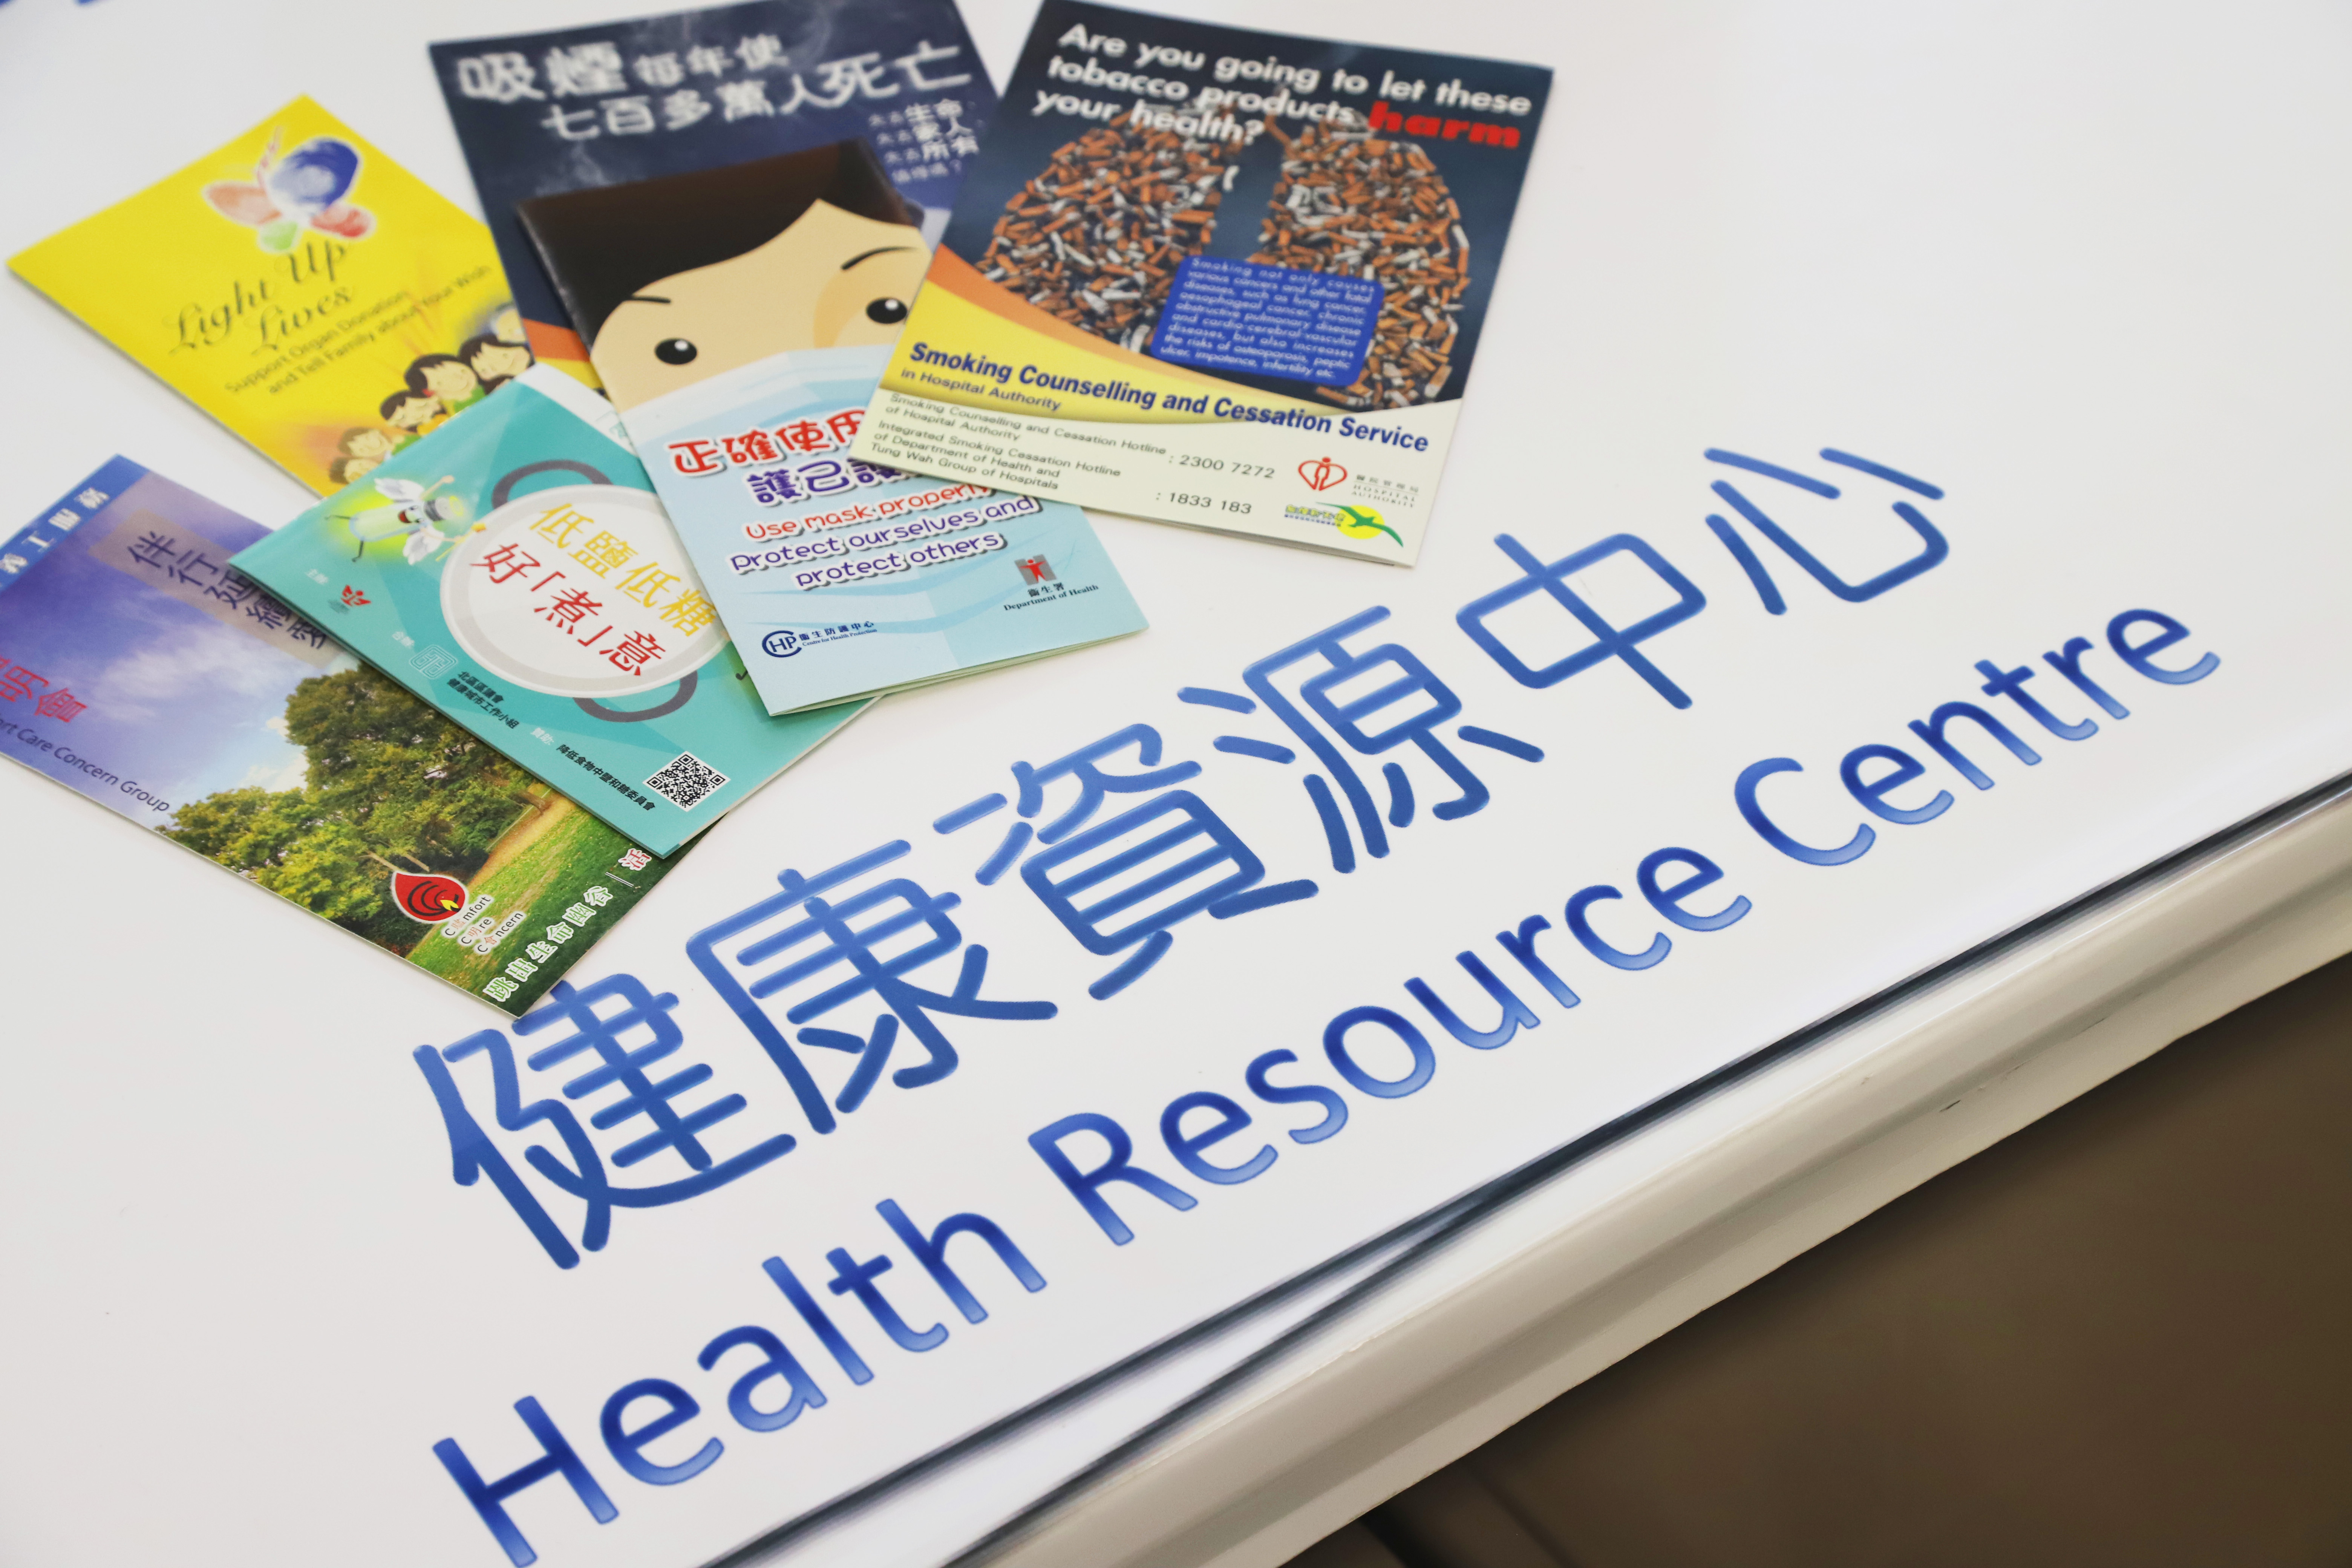 Health Resources Centre photo